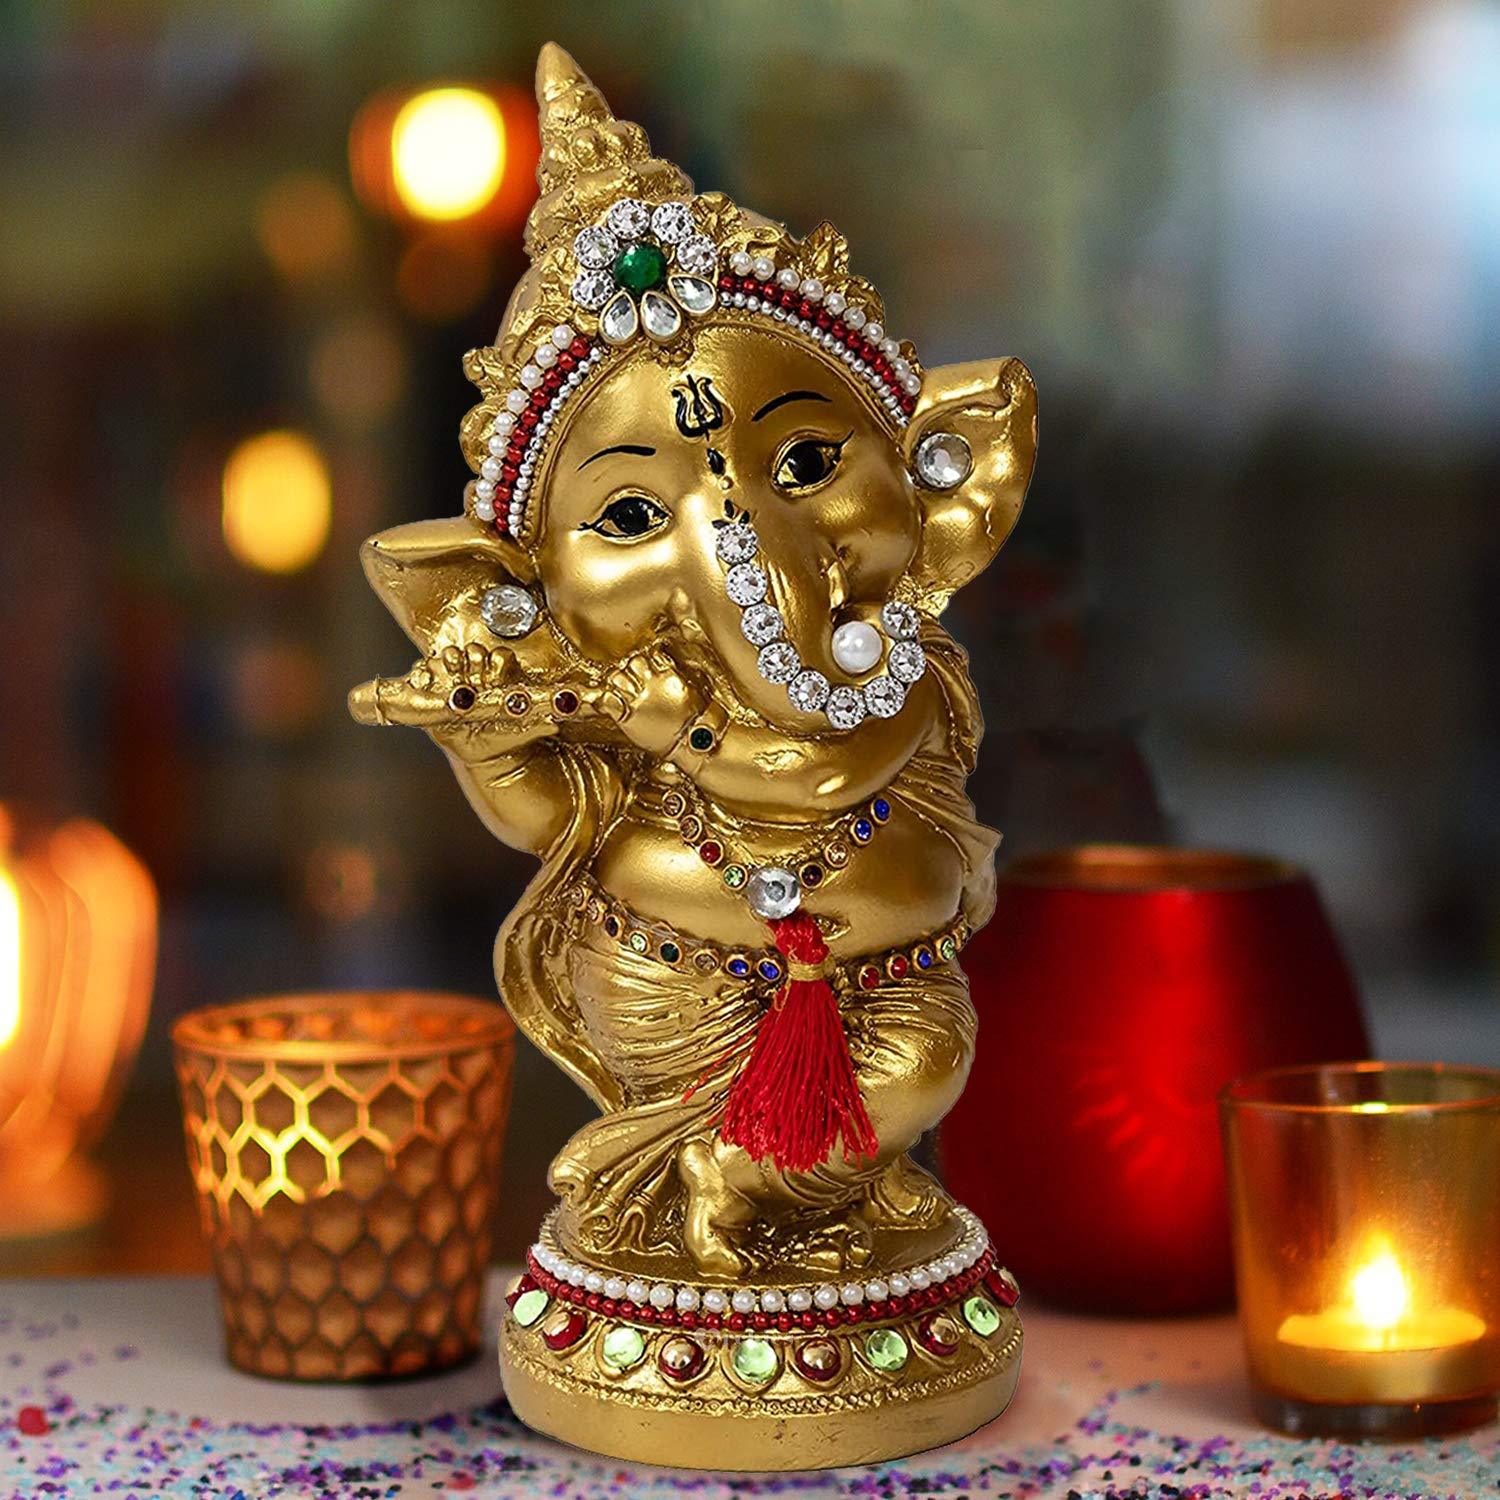 Metal Lord Ganesh Idol Playing Bansuri Statue For Pooja, Home Décor & Gifts Purpose - Walgrow.com